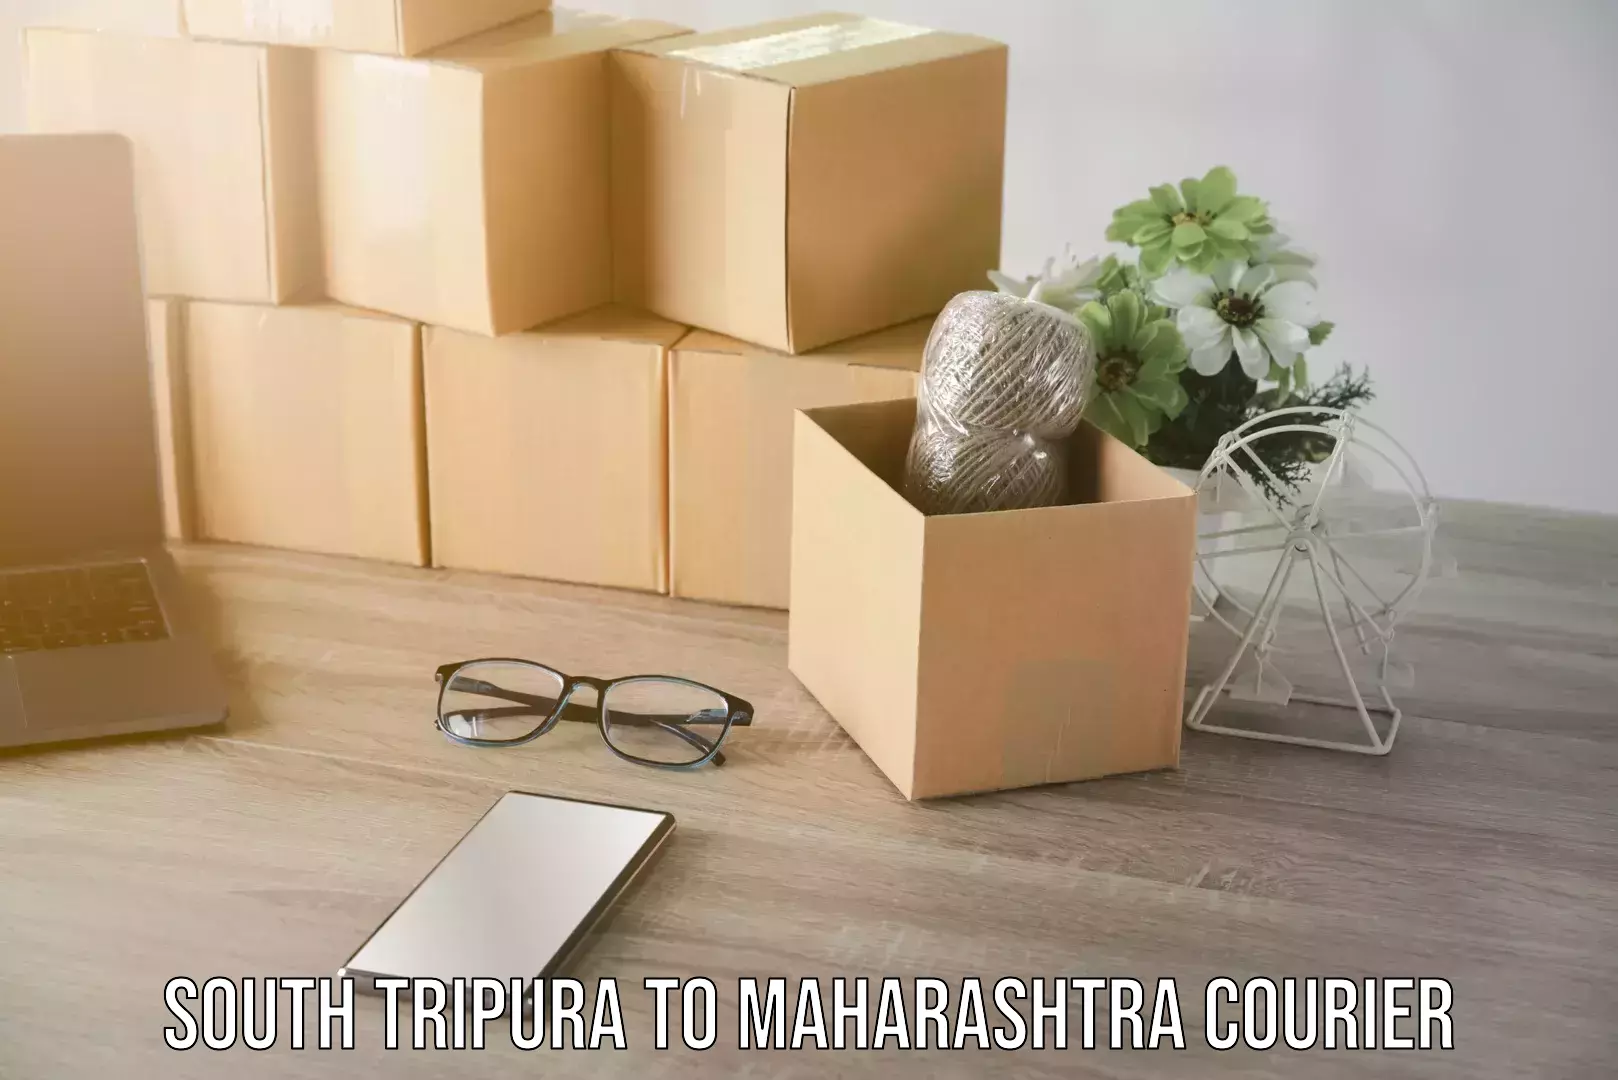 Courier service booking South Tripura to Maharashtra